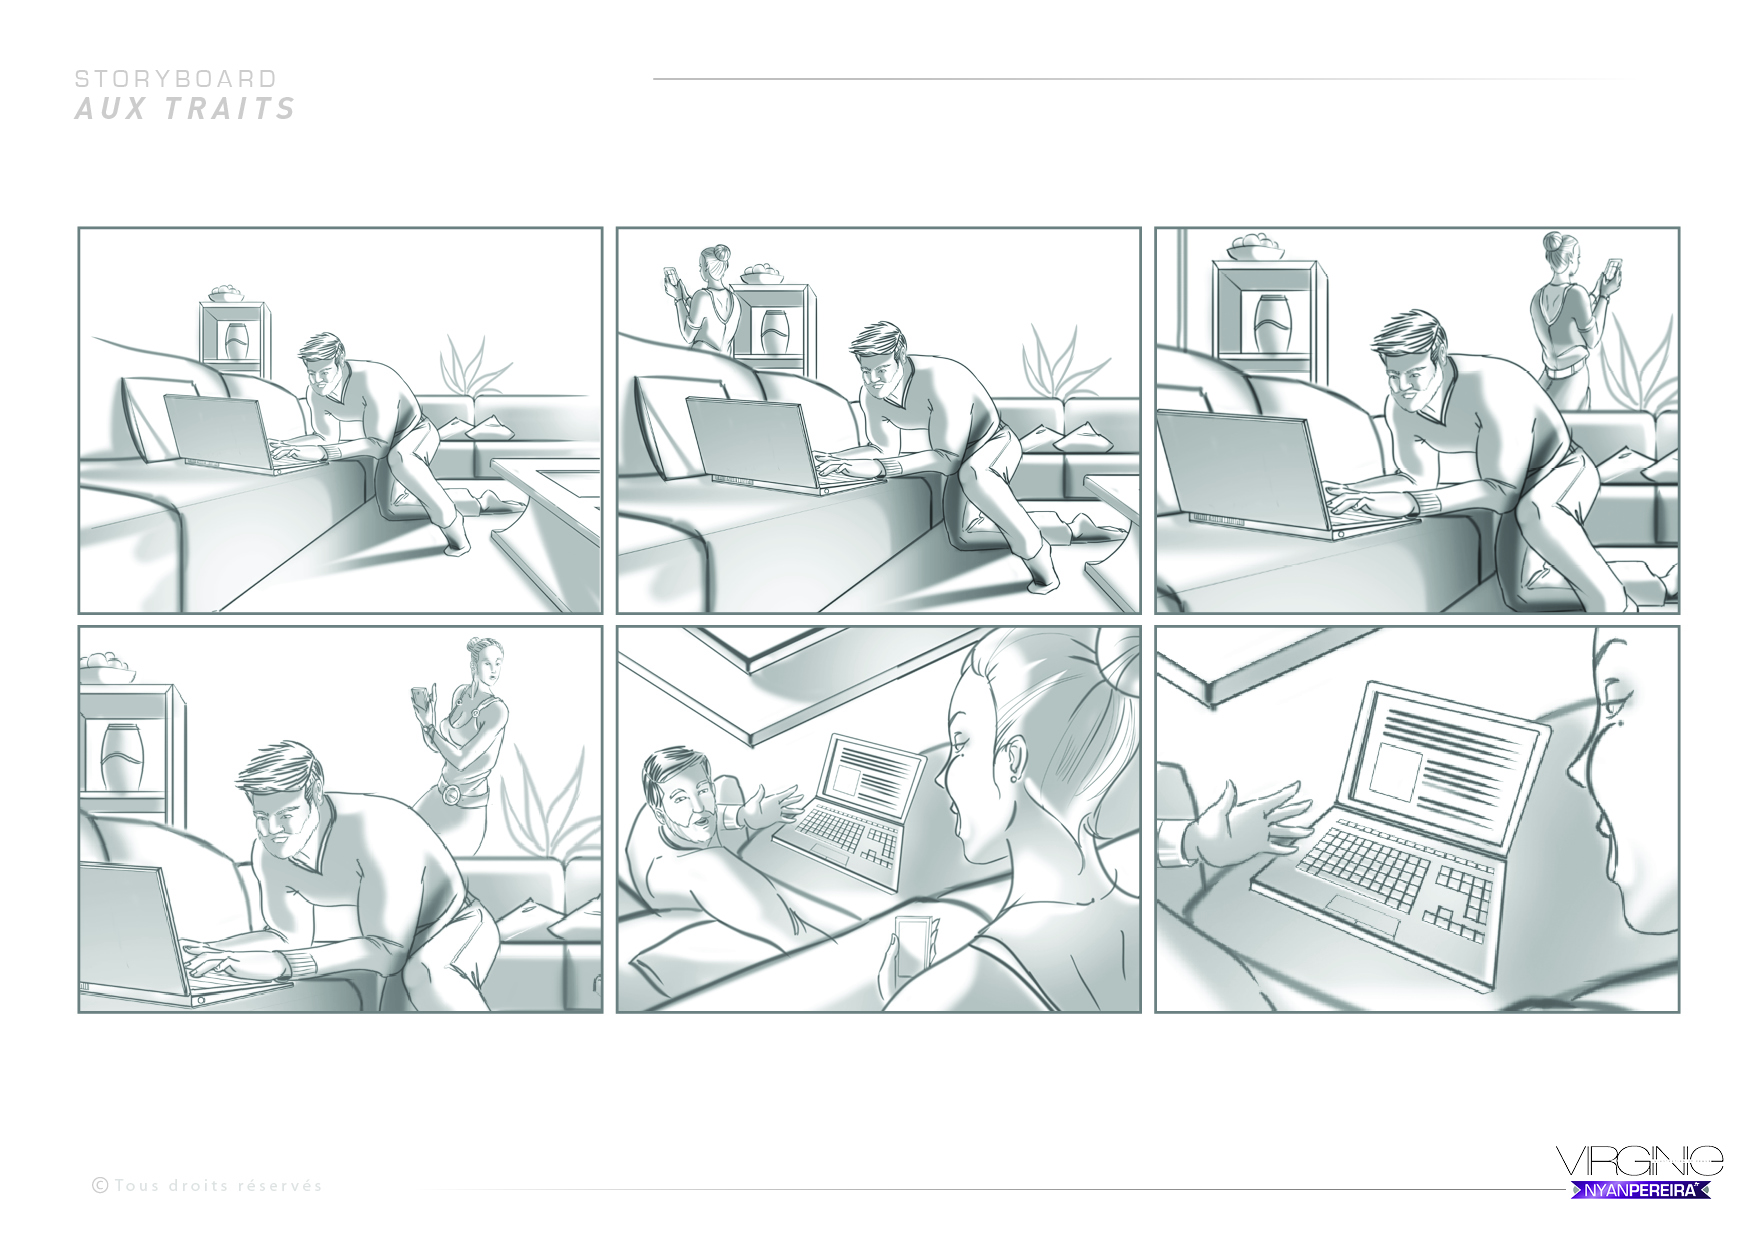 Storyboarder Freelance PACA : Image storyboard (2)